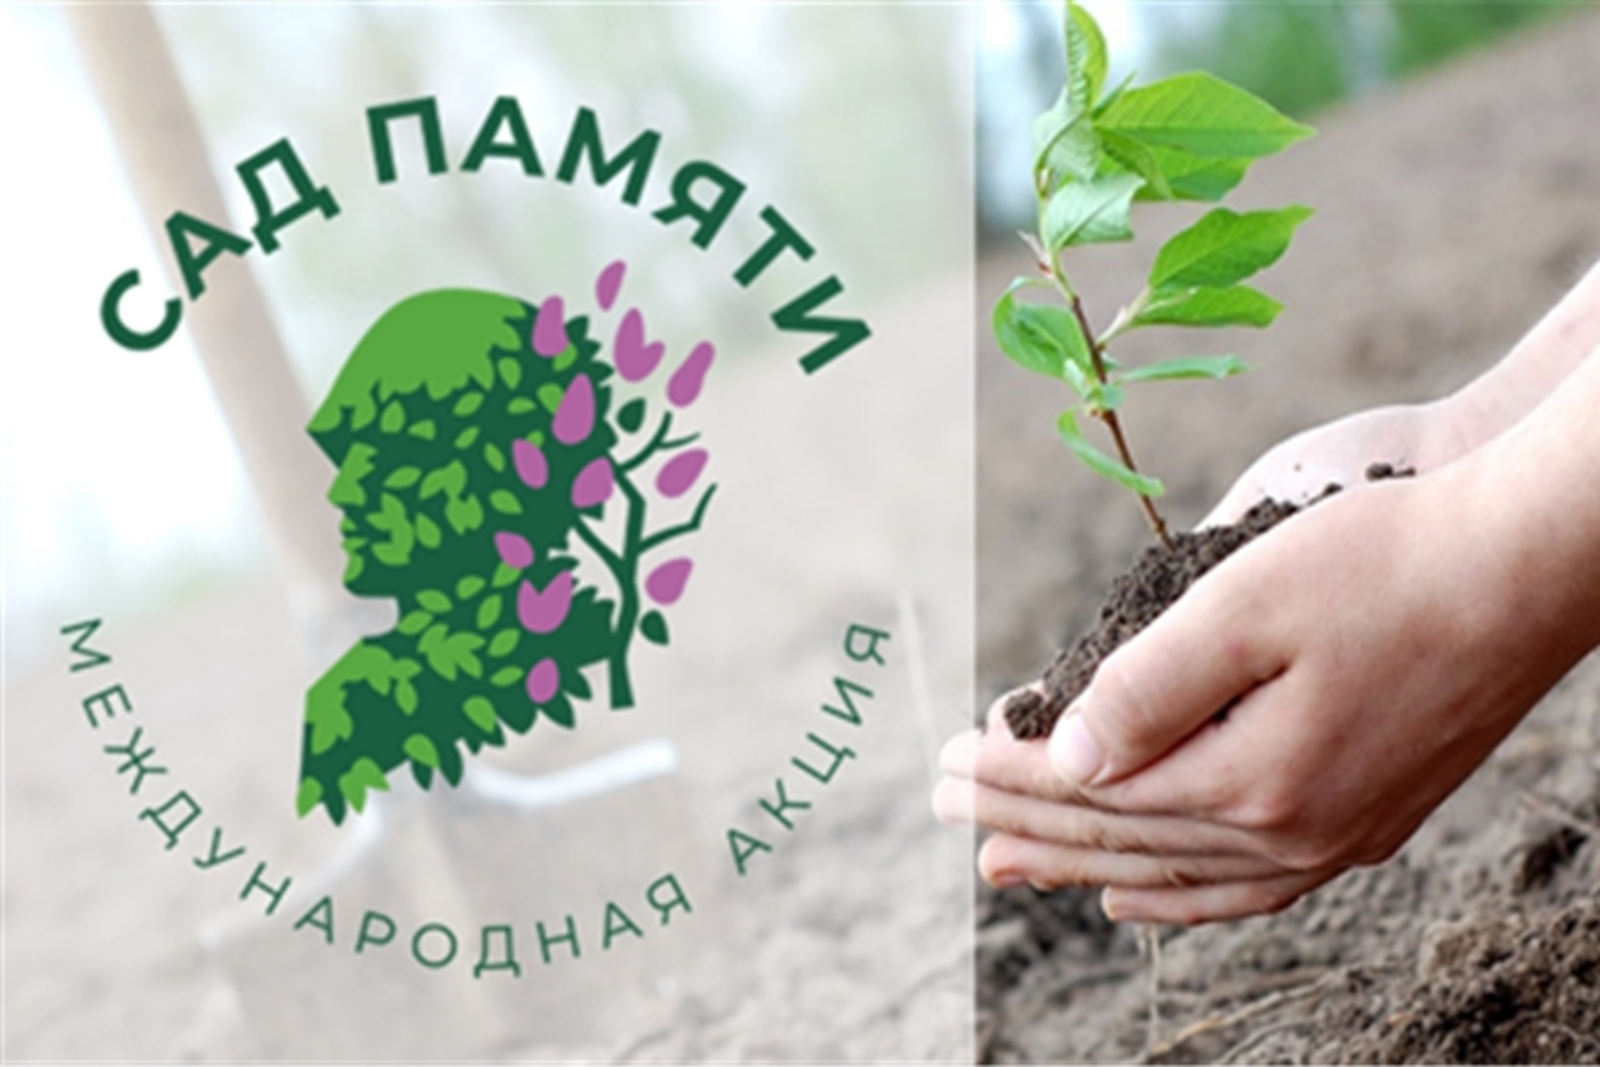 20 апреля в Башкирии стартует акция «Сад памяти»